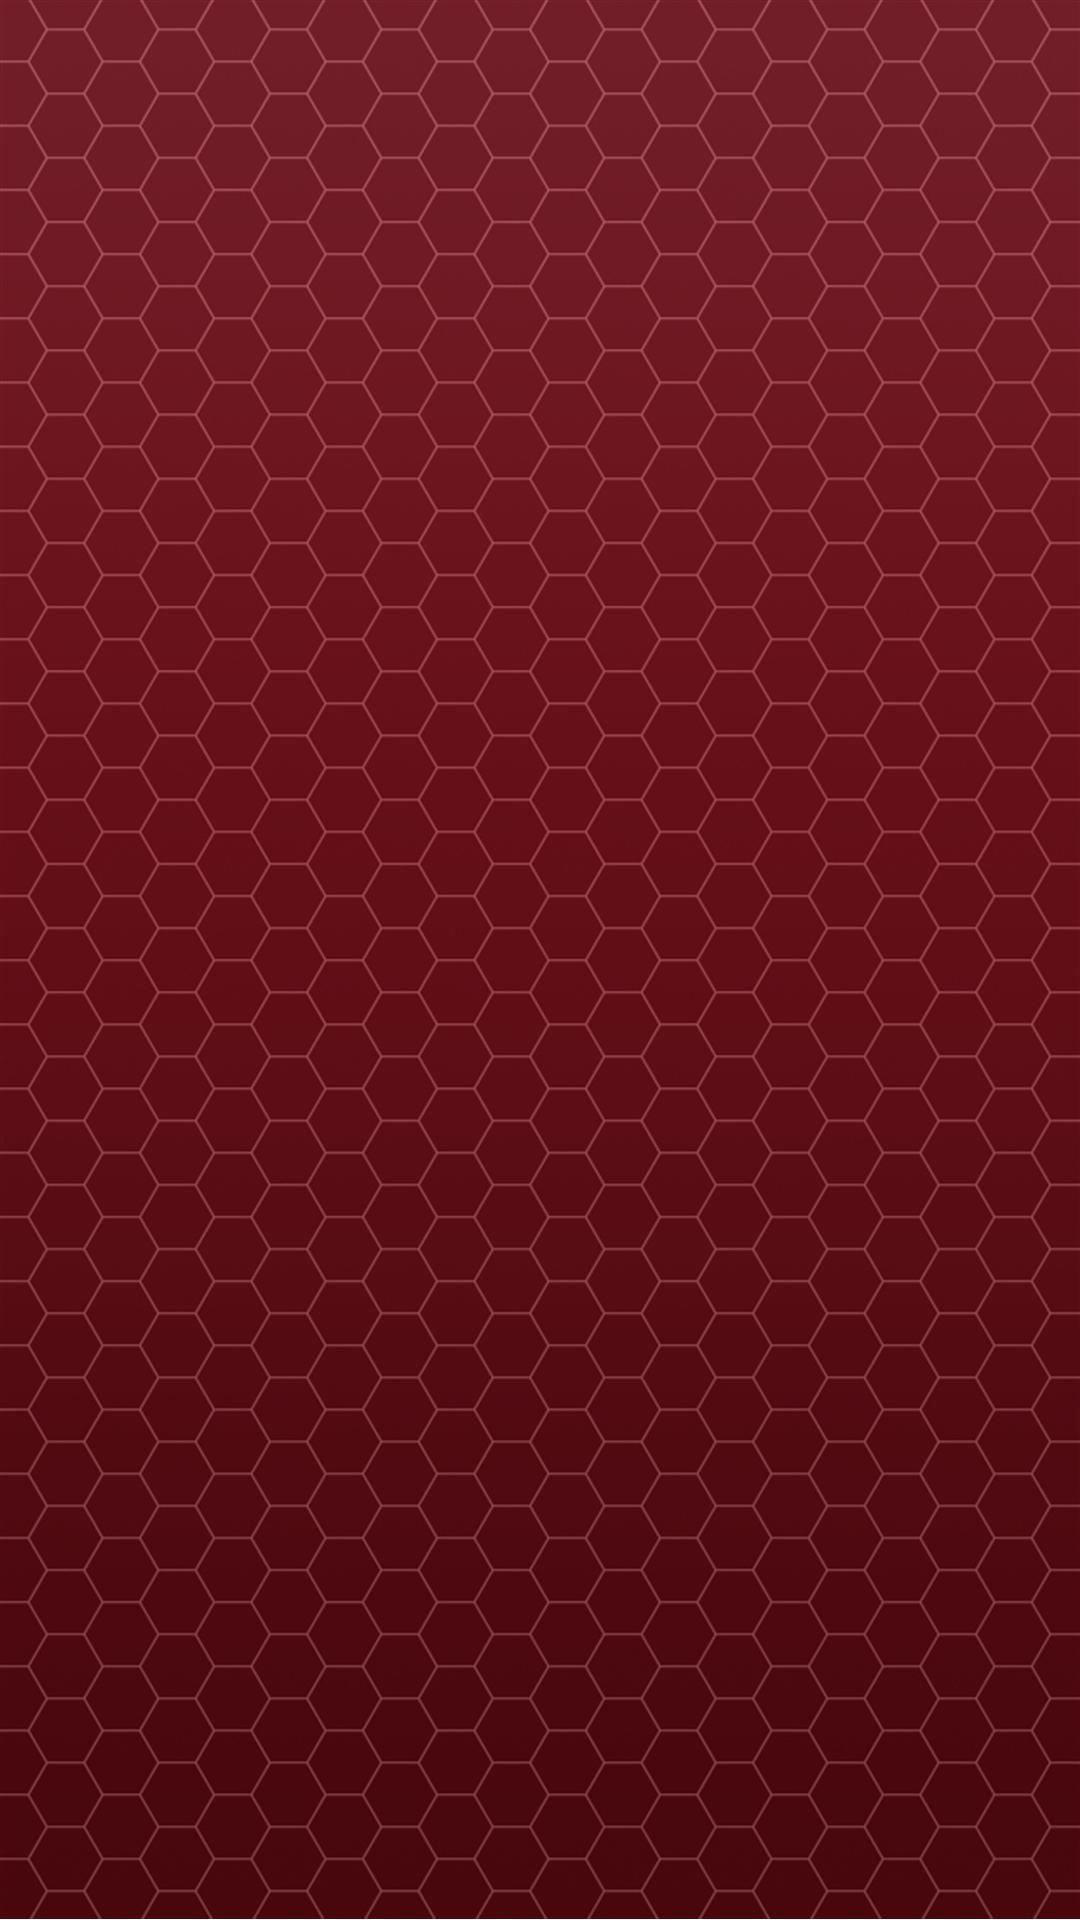 Red Honeycomb Wallpaper